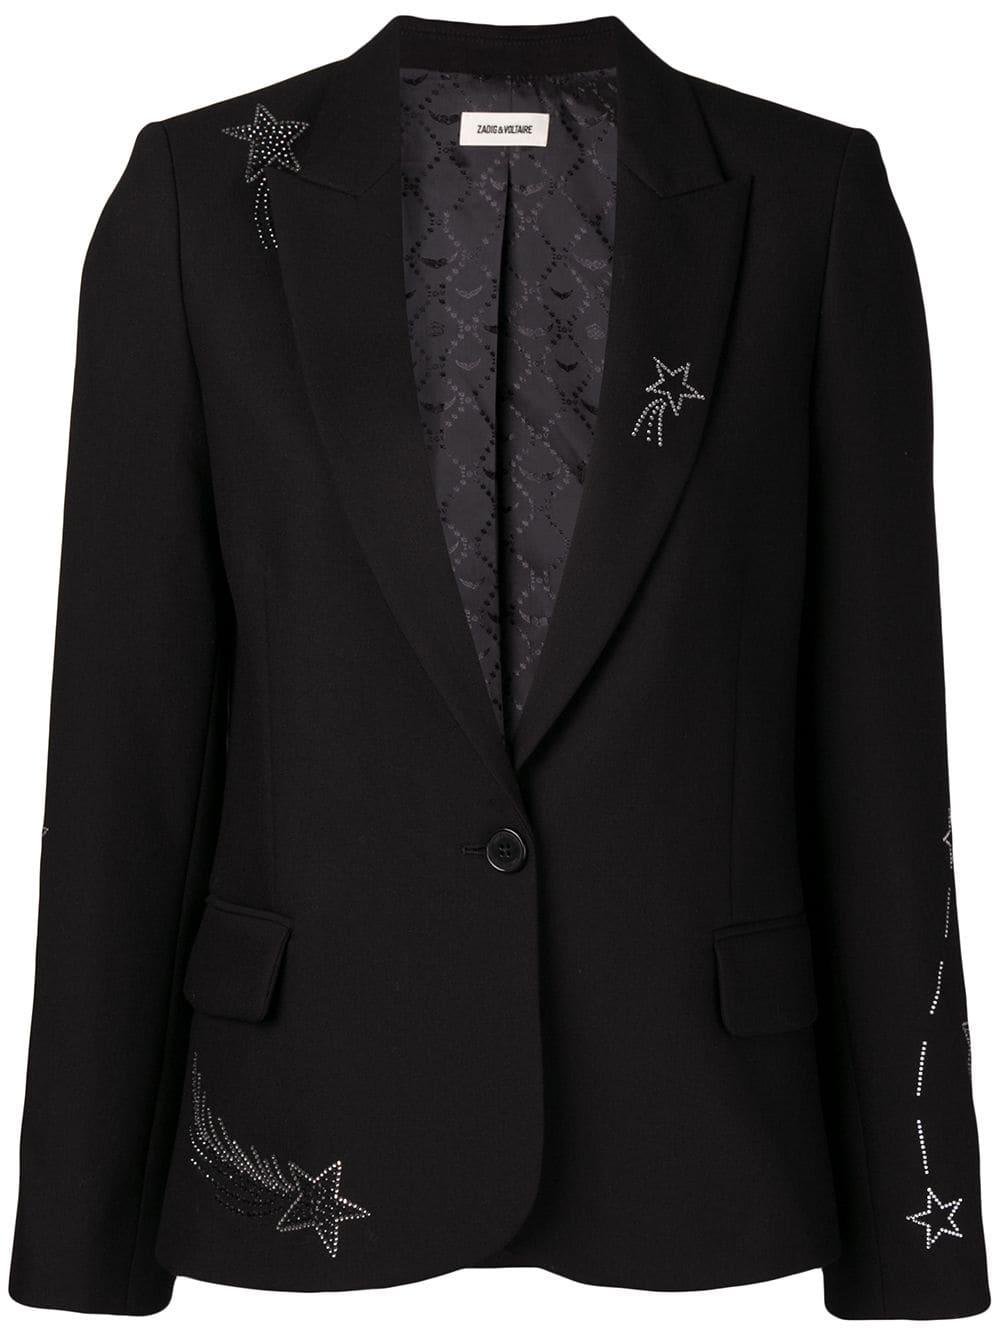 Zadig & Voltaire Star Embellished Blazer in Black | Lyst